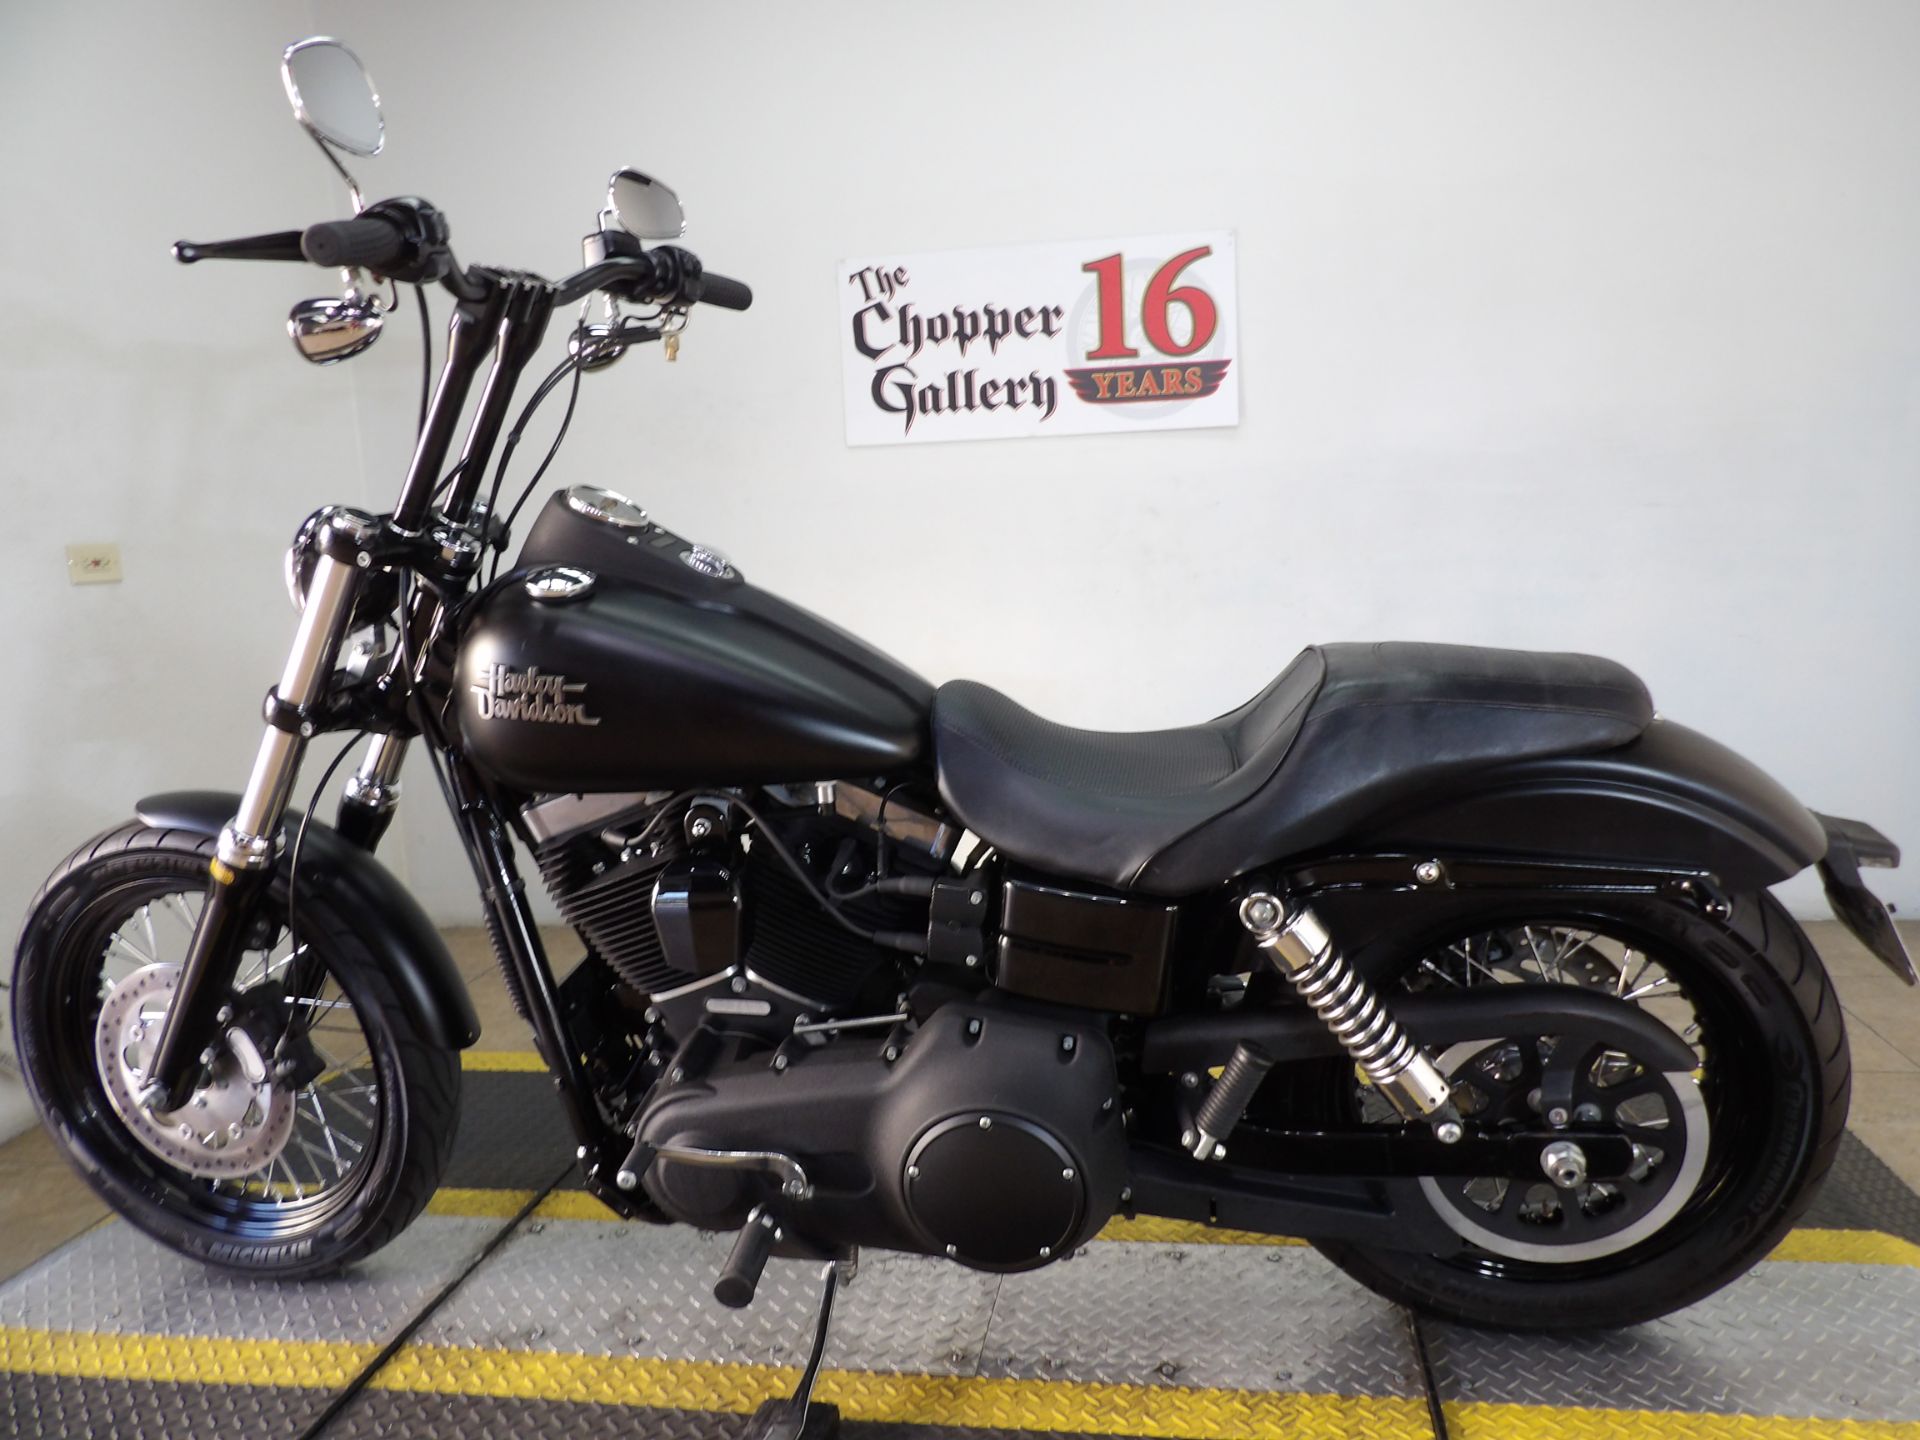 2013 Harley-Davidson Dyna® Street Bob® in Temecula, California - Photo 6